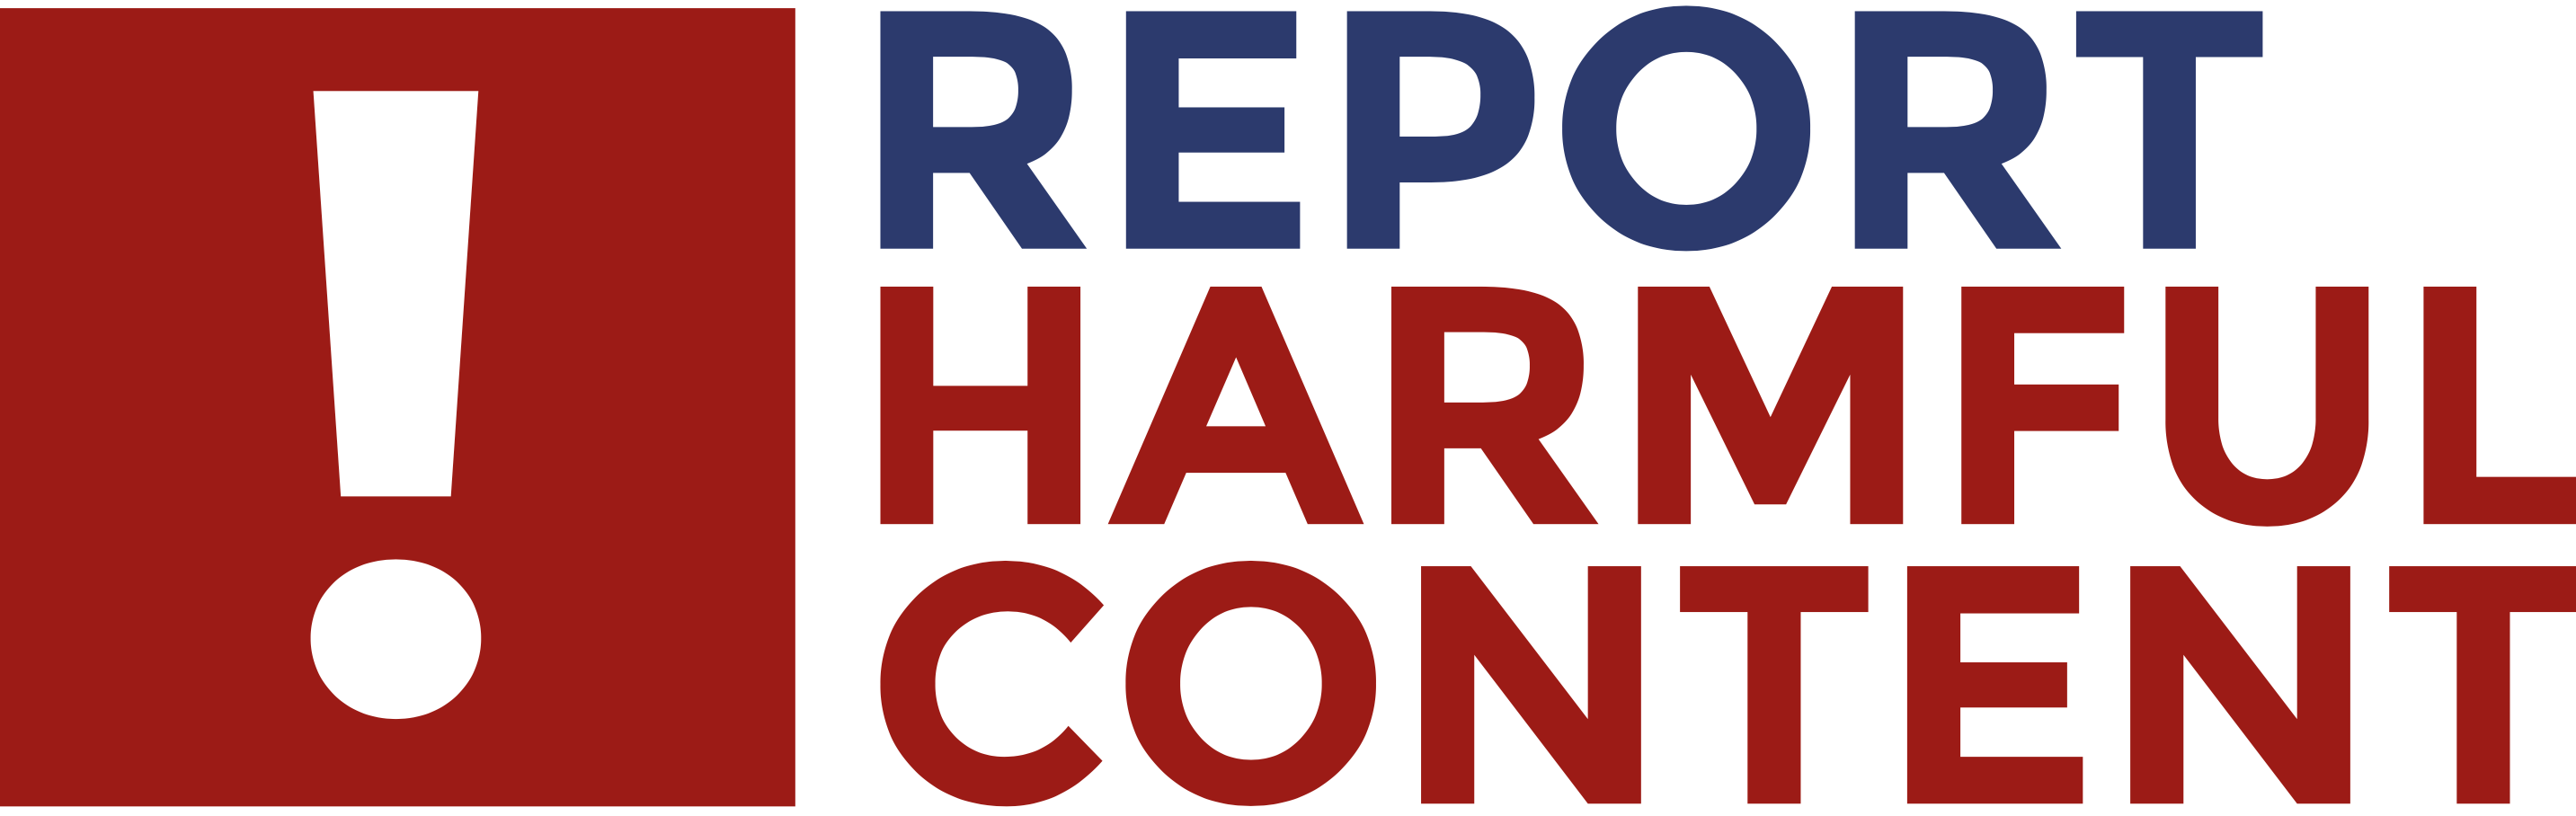 Report Harmful Content